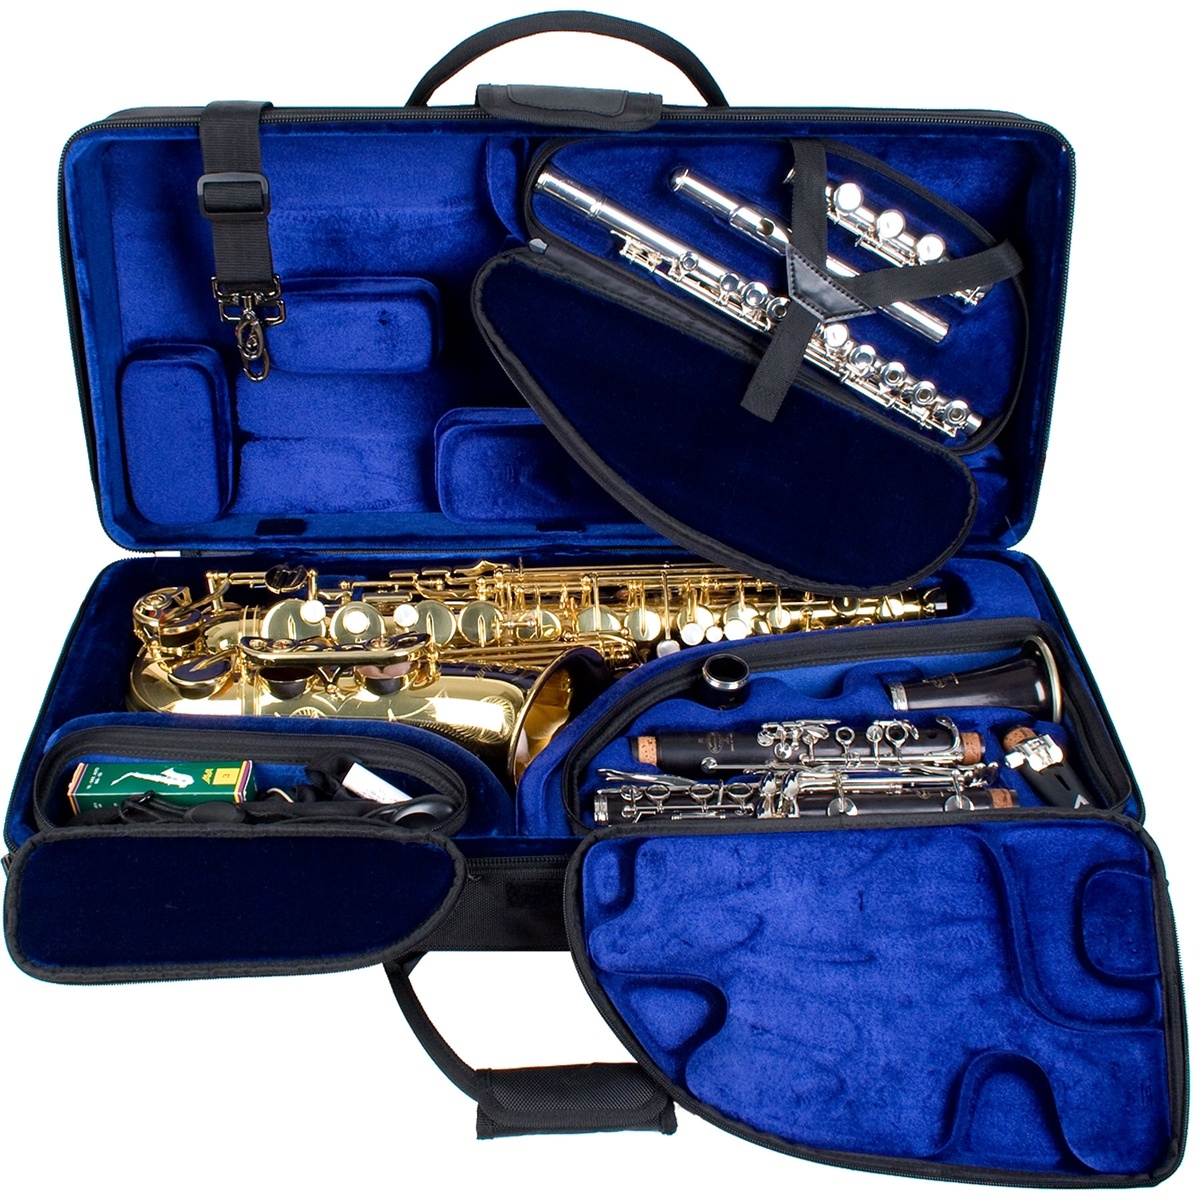 Protec Protec PBTRIALT Pro Pac Alto Sax/Clarinet/Flute Case